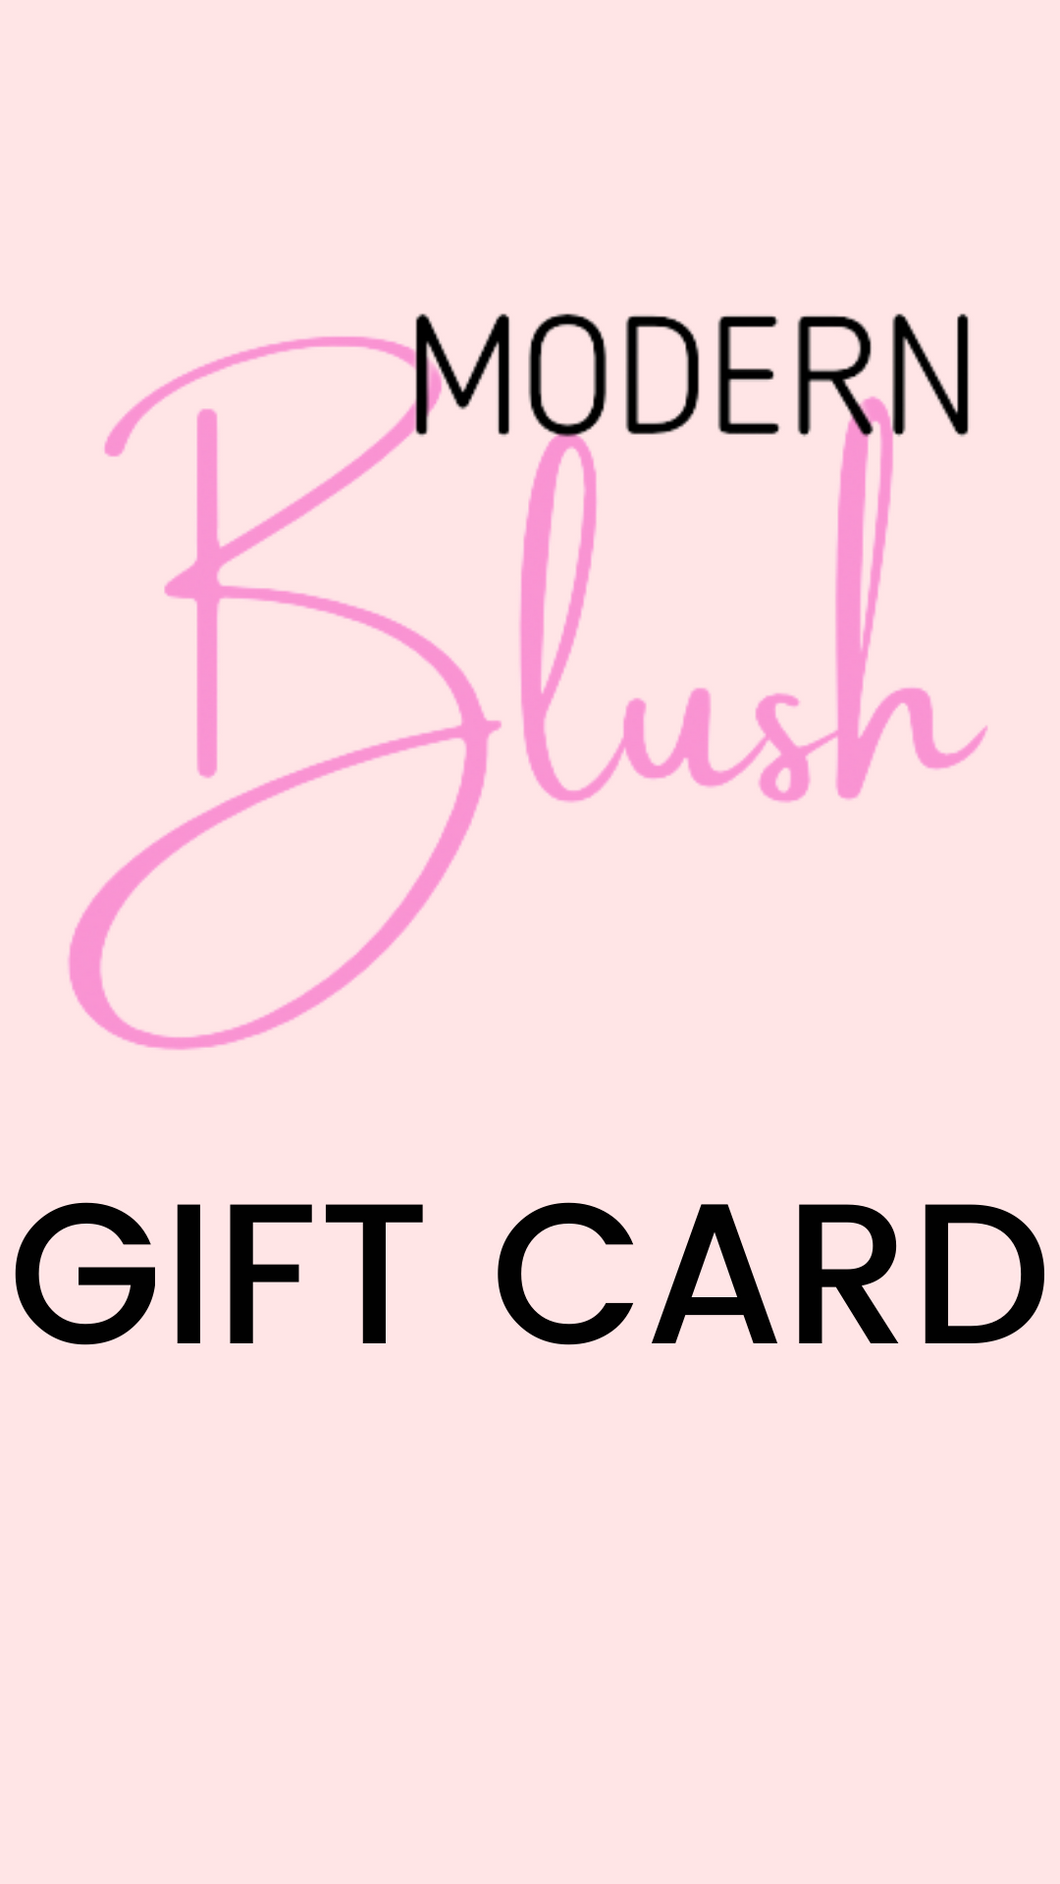 MODERN BLUSH GIFT CARDS!